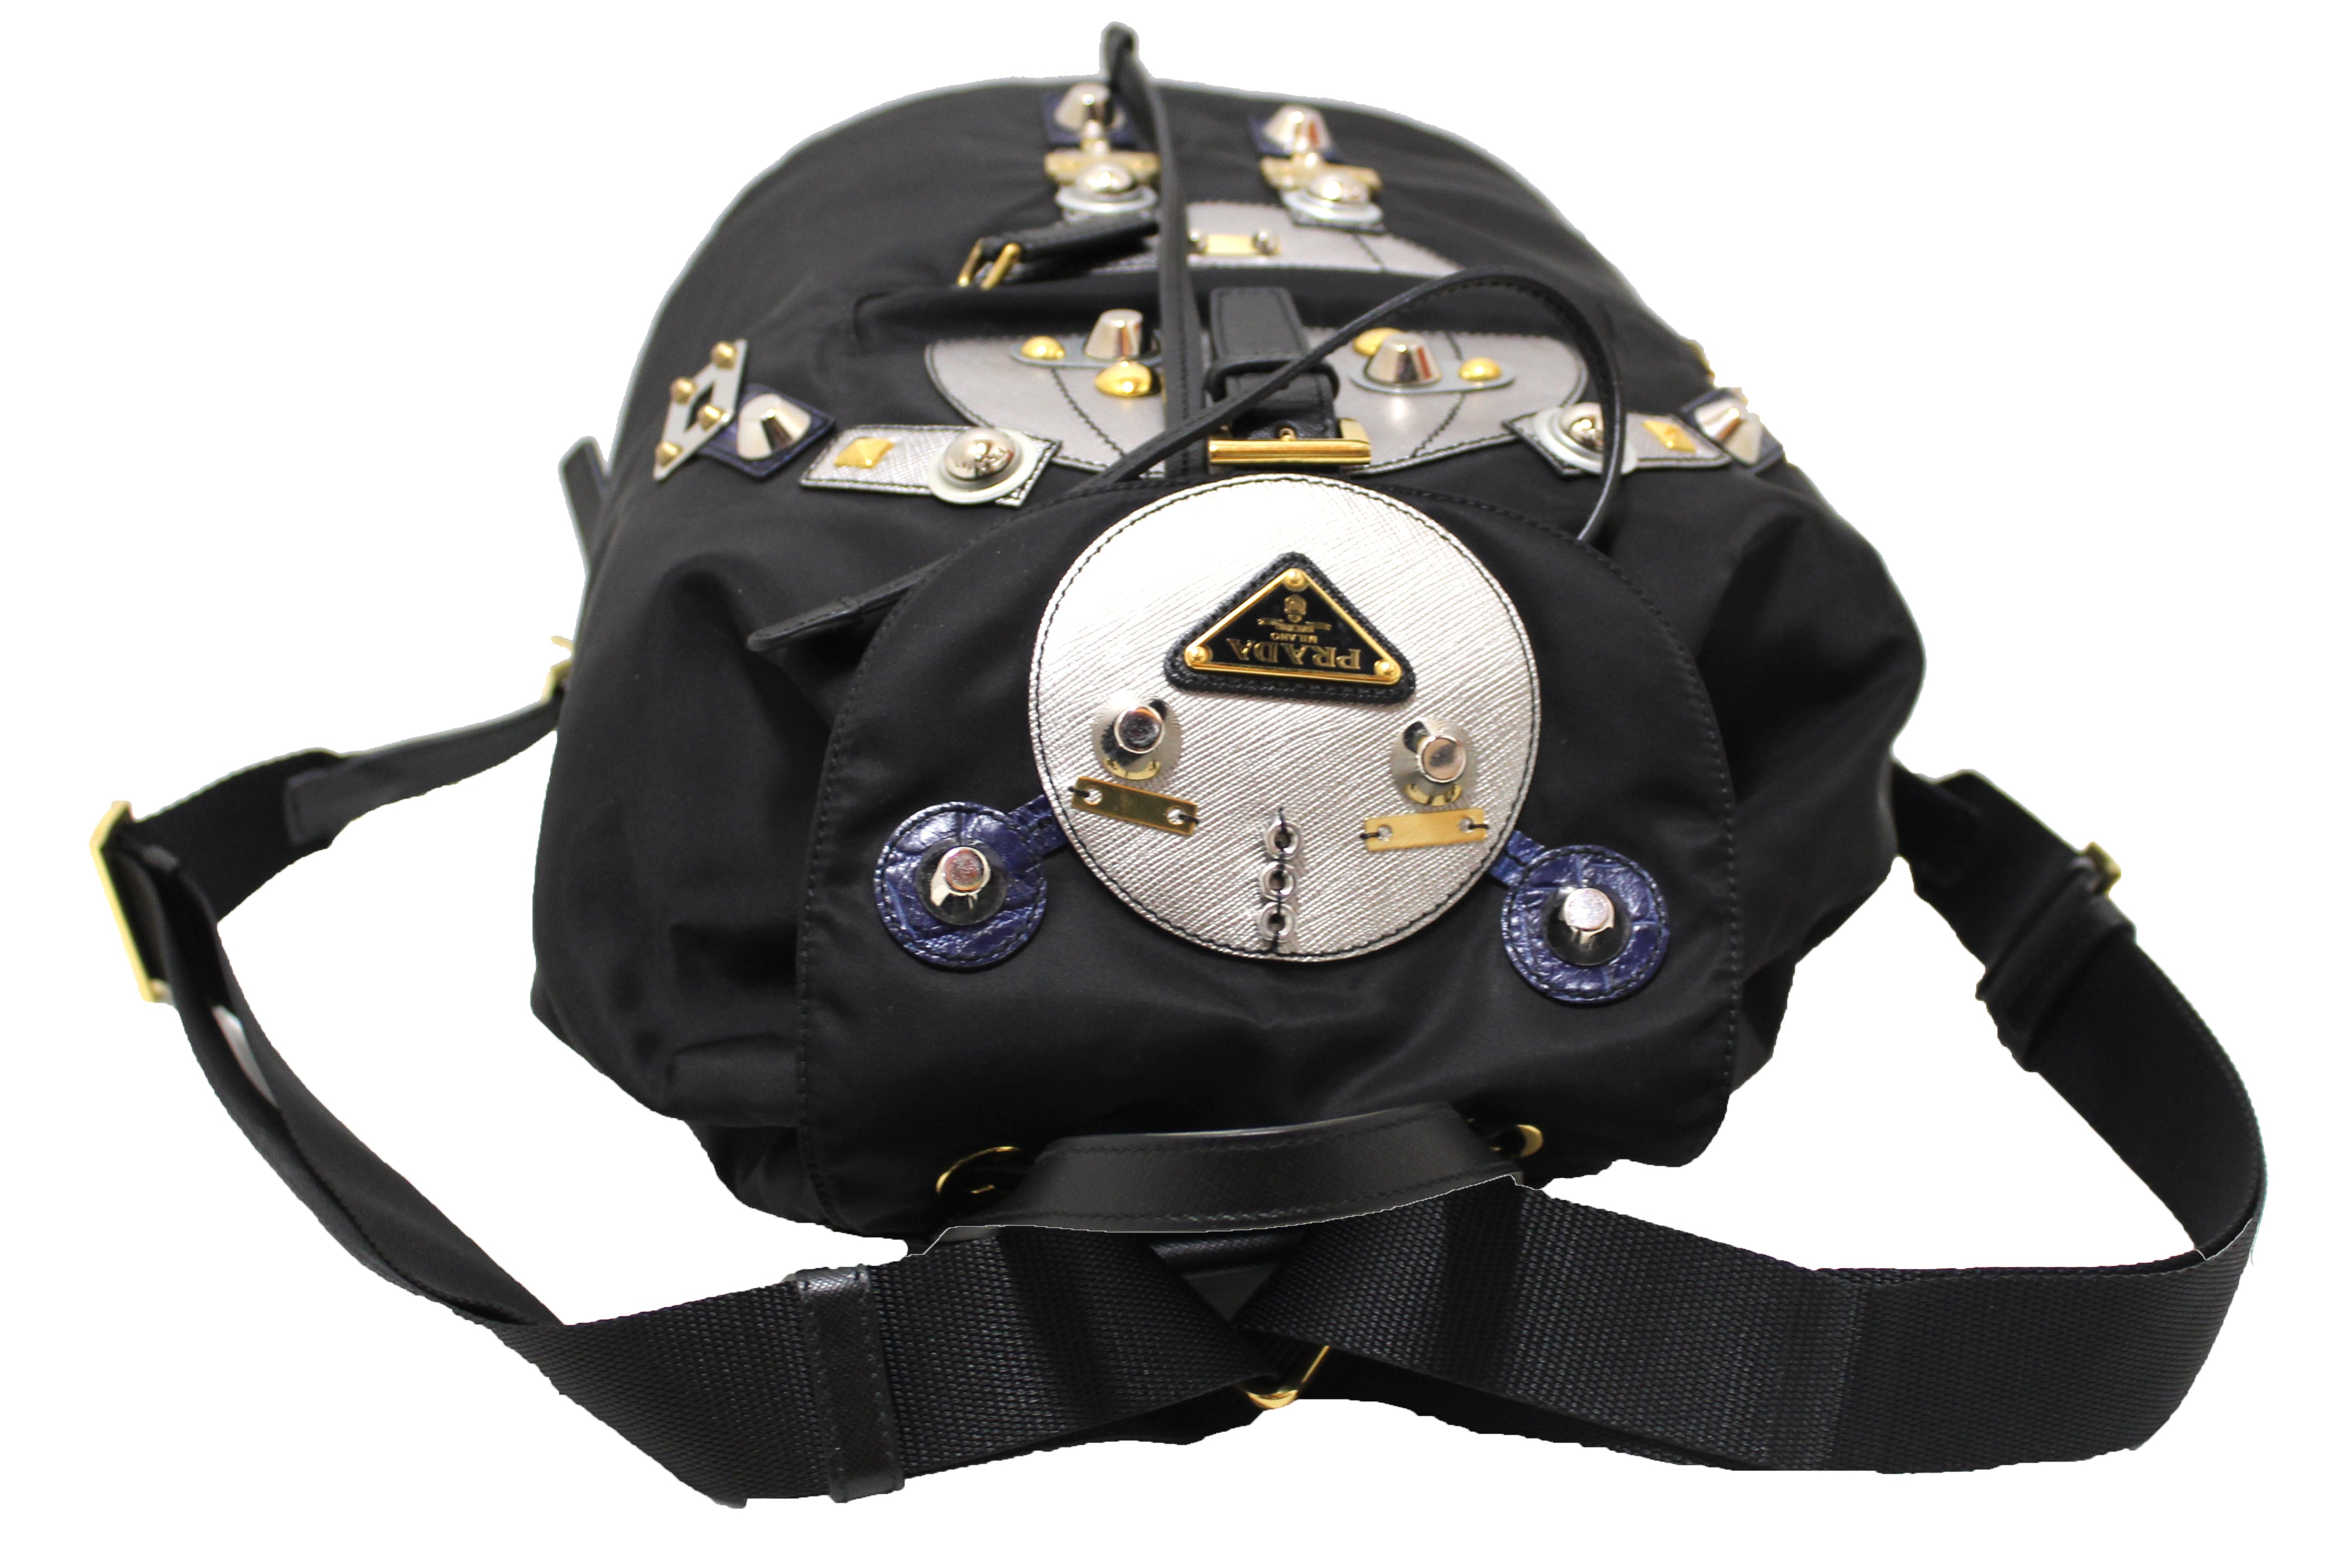 Authentic Prada Black Tessuto Nylon Robot Backpack